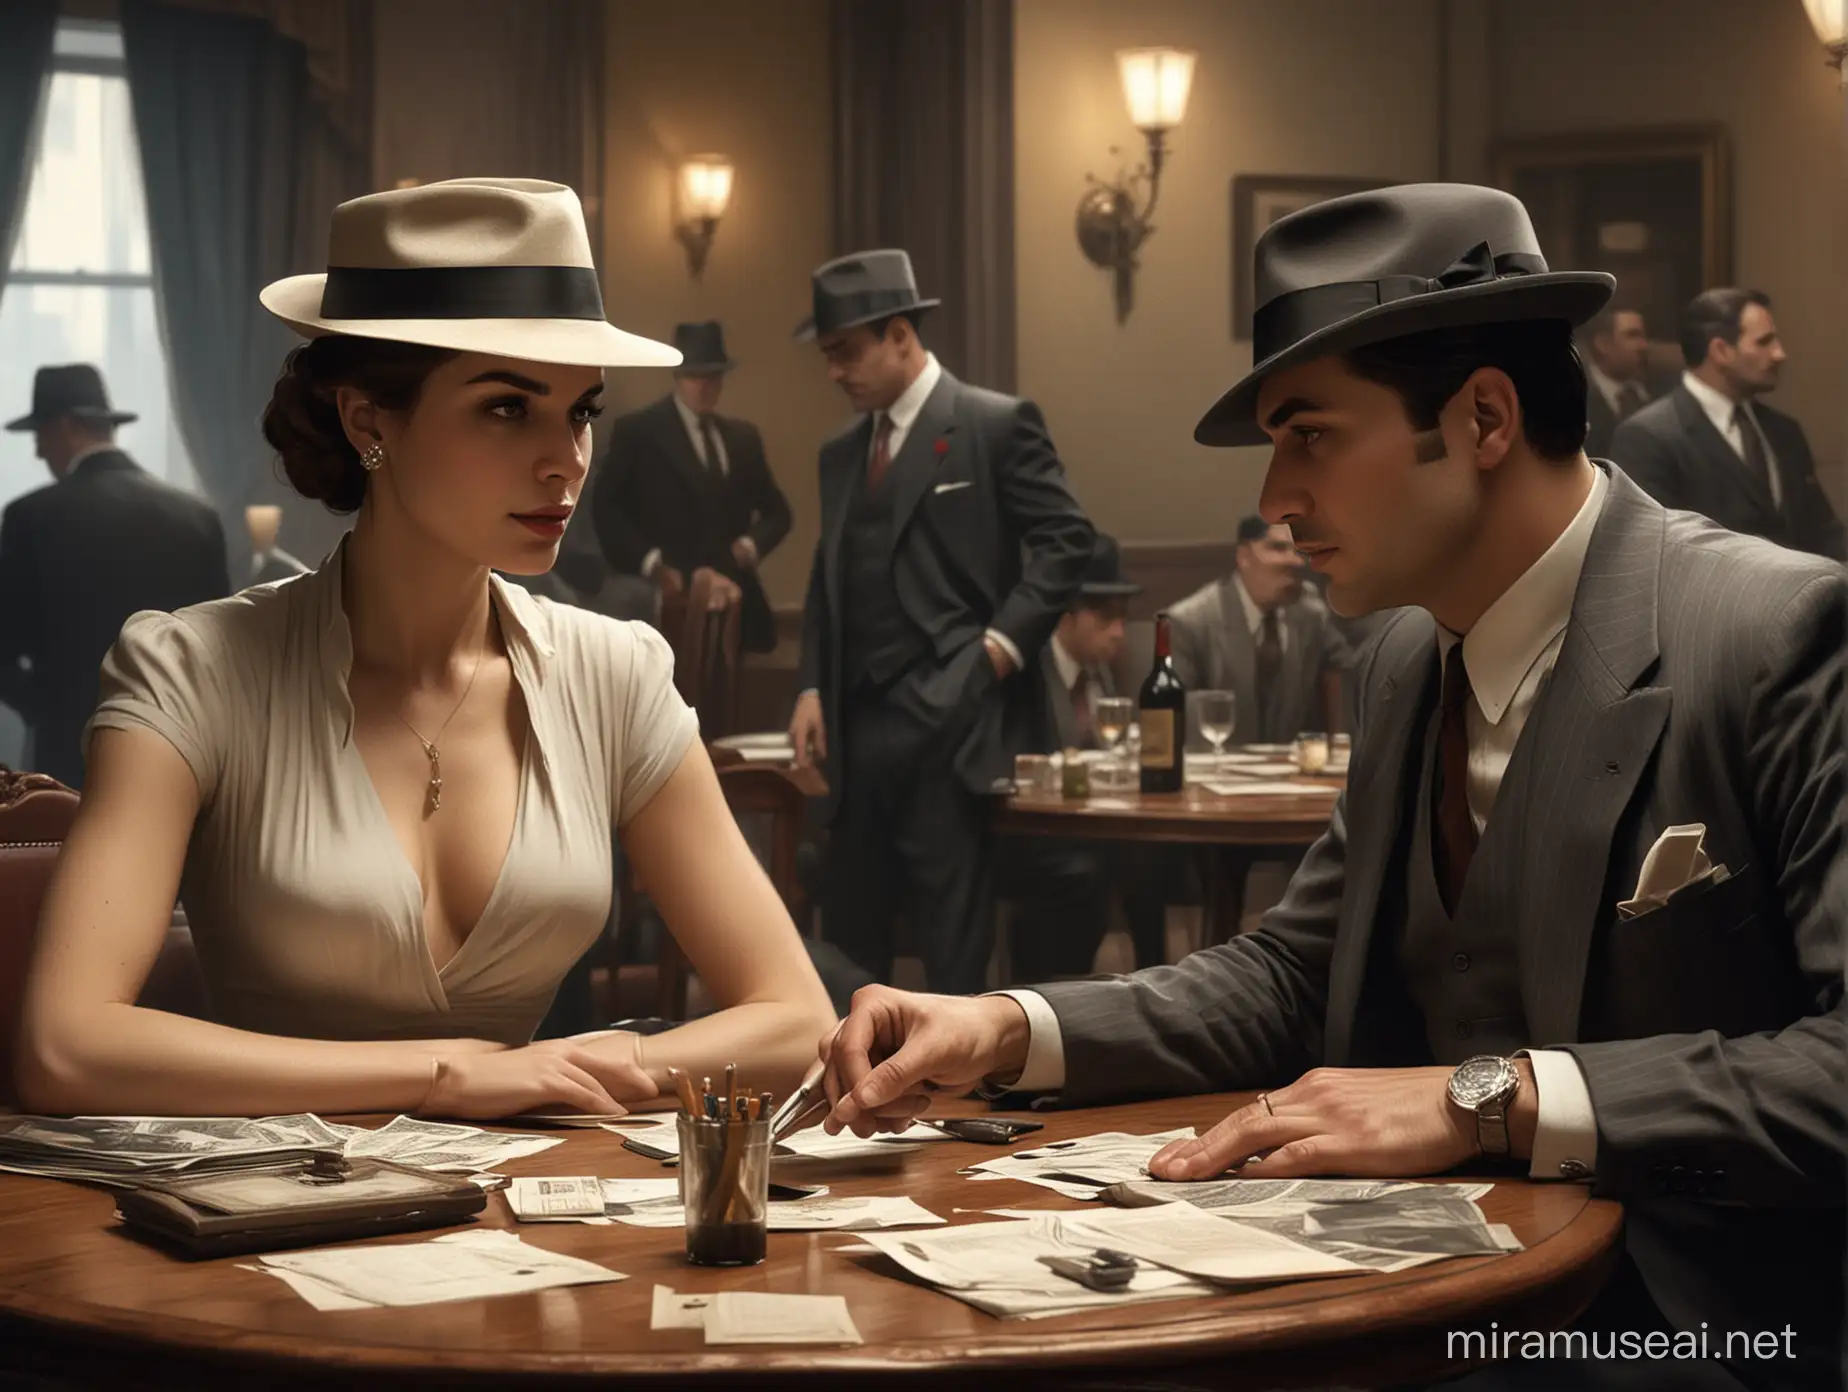 Al Capone Style Mafia Roleplay Elegantly Dressed Figures Engage in Reallife Scenario